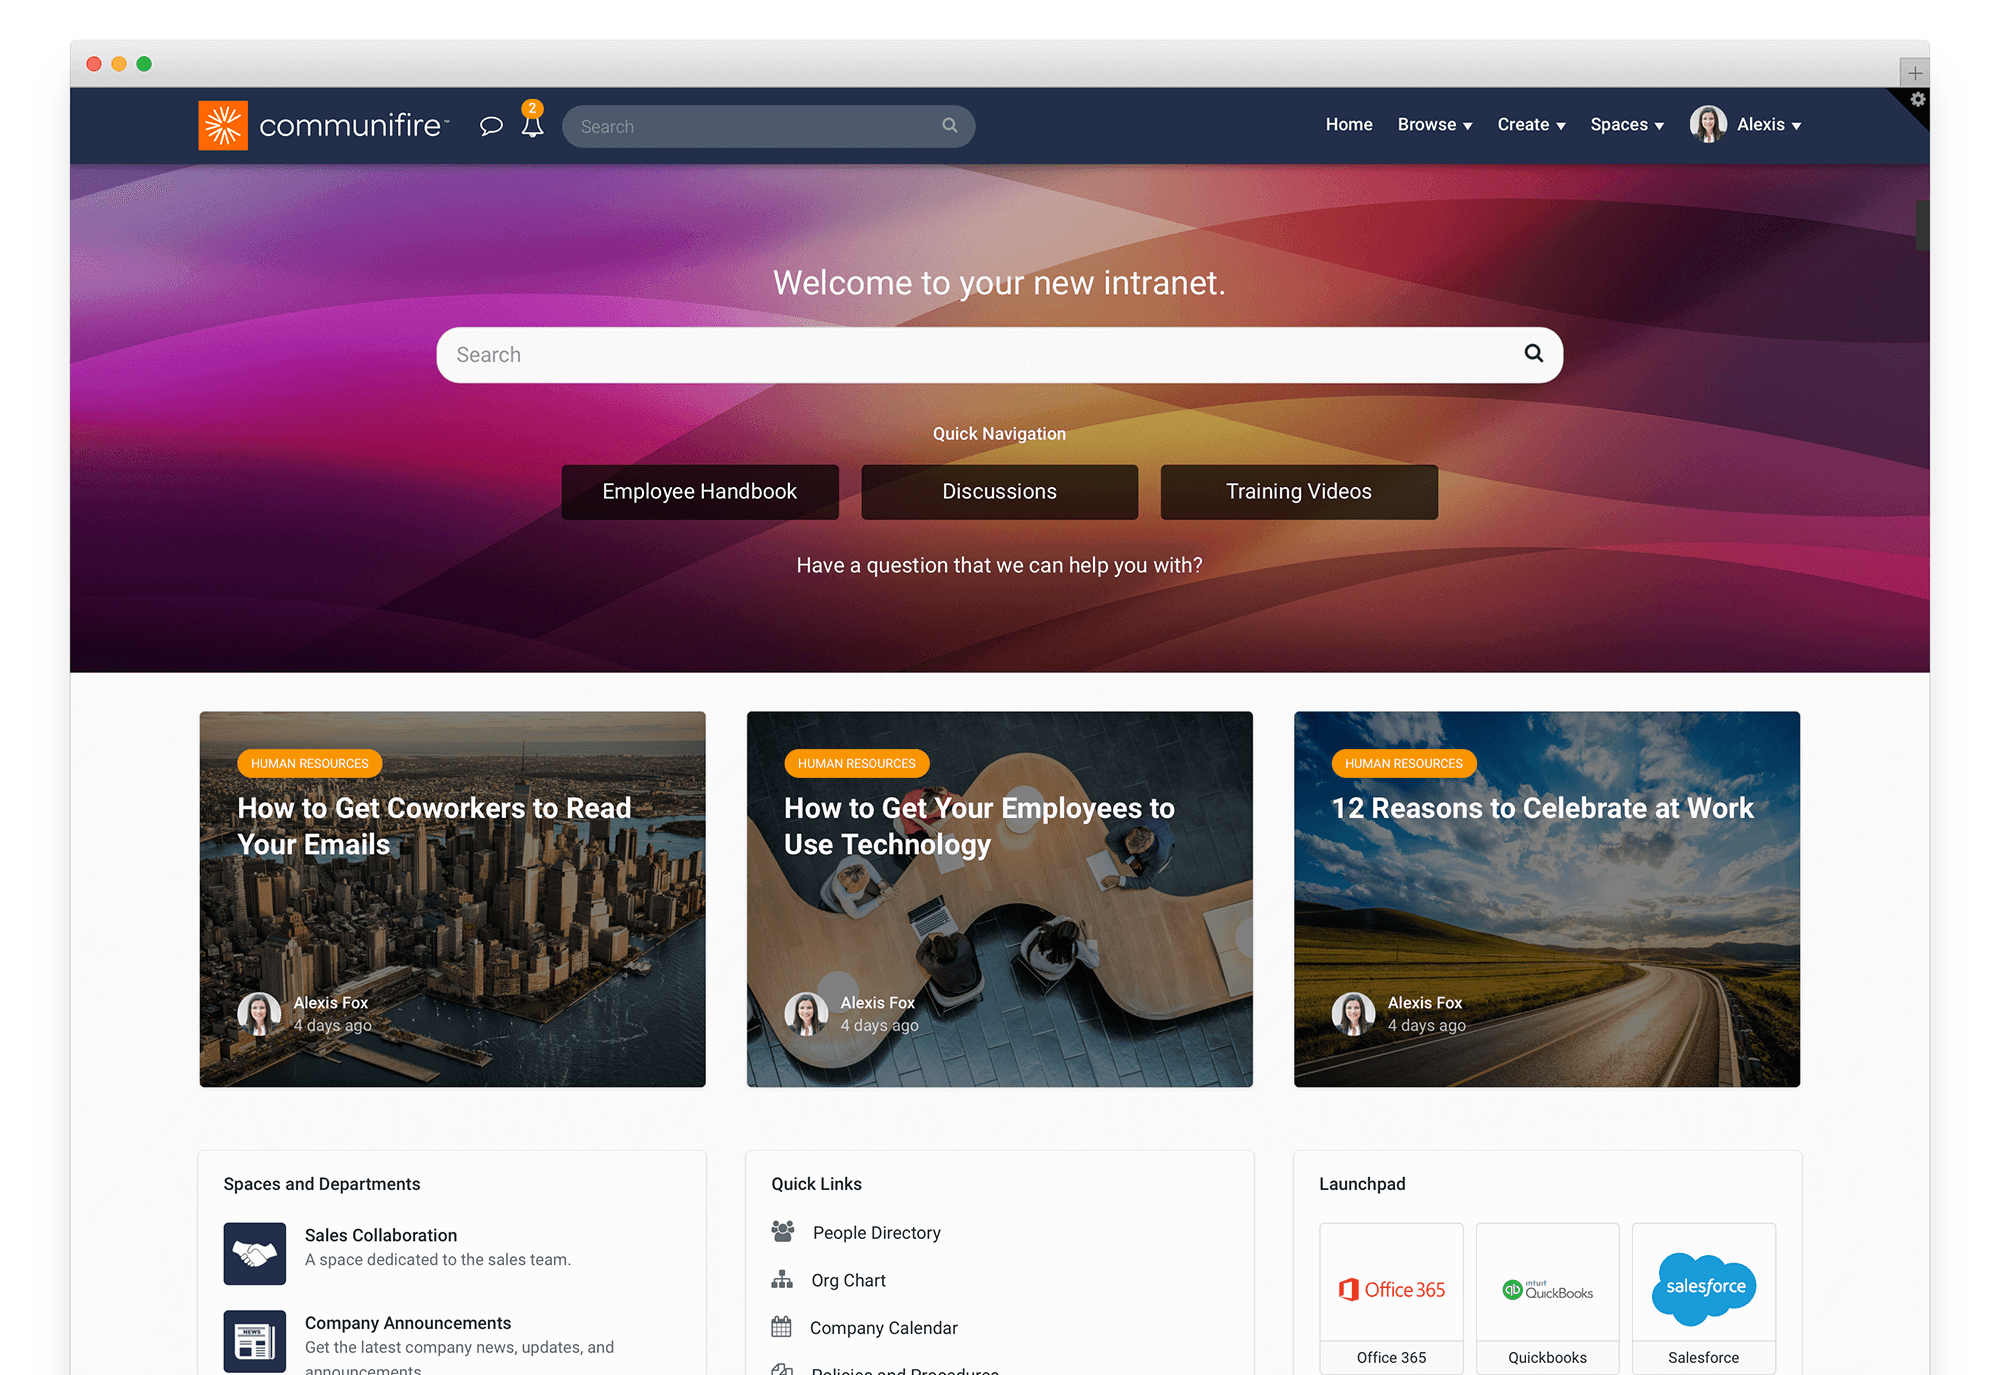 intranet design - homepage - company culture